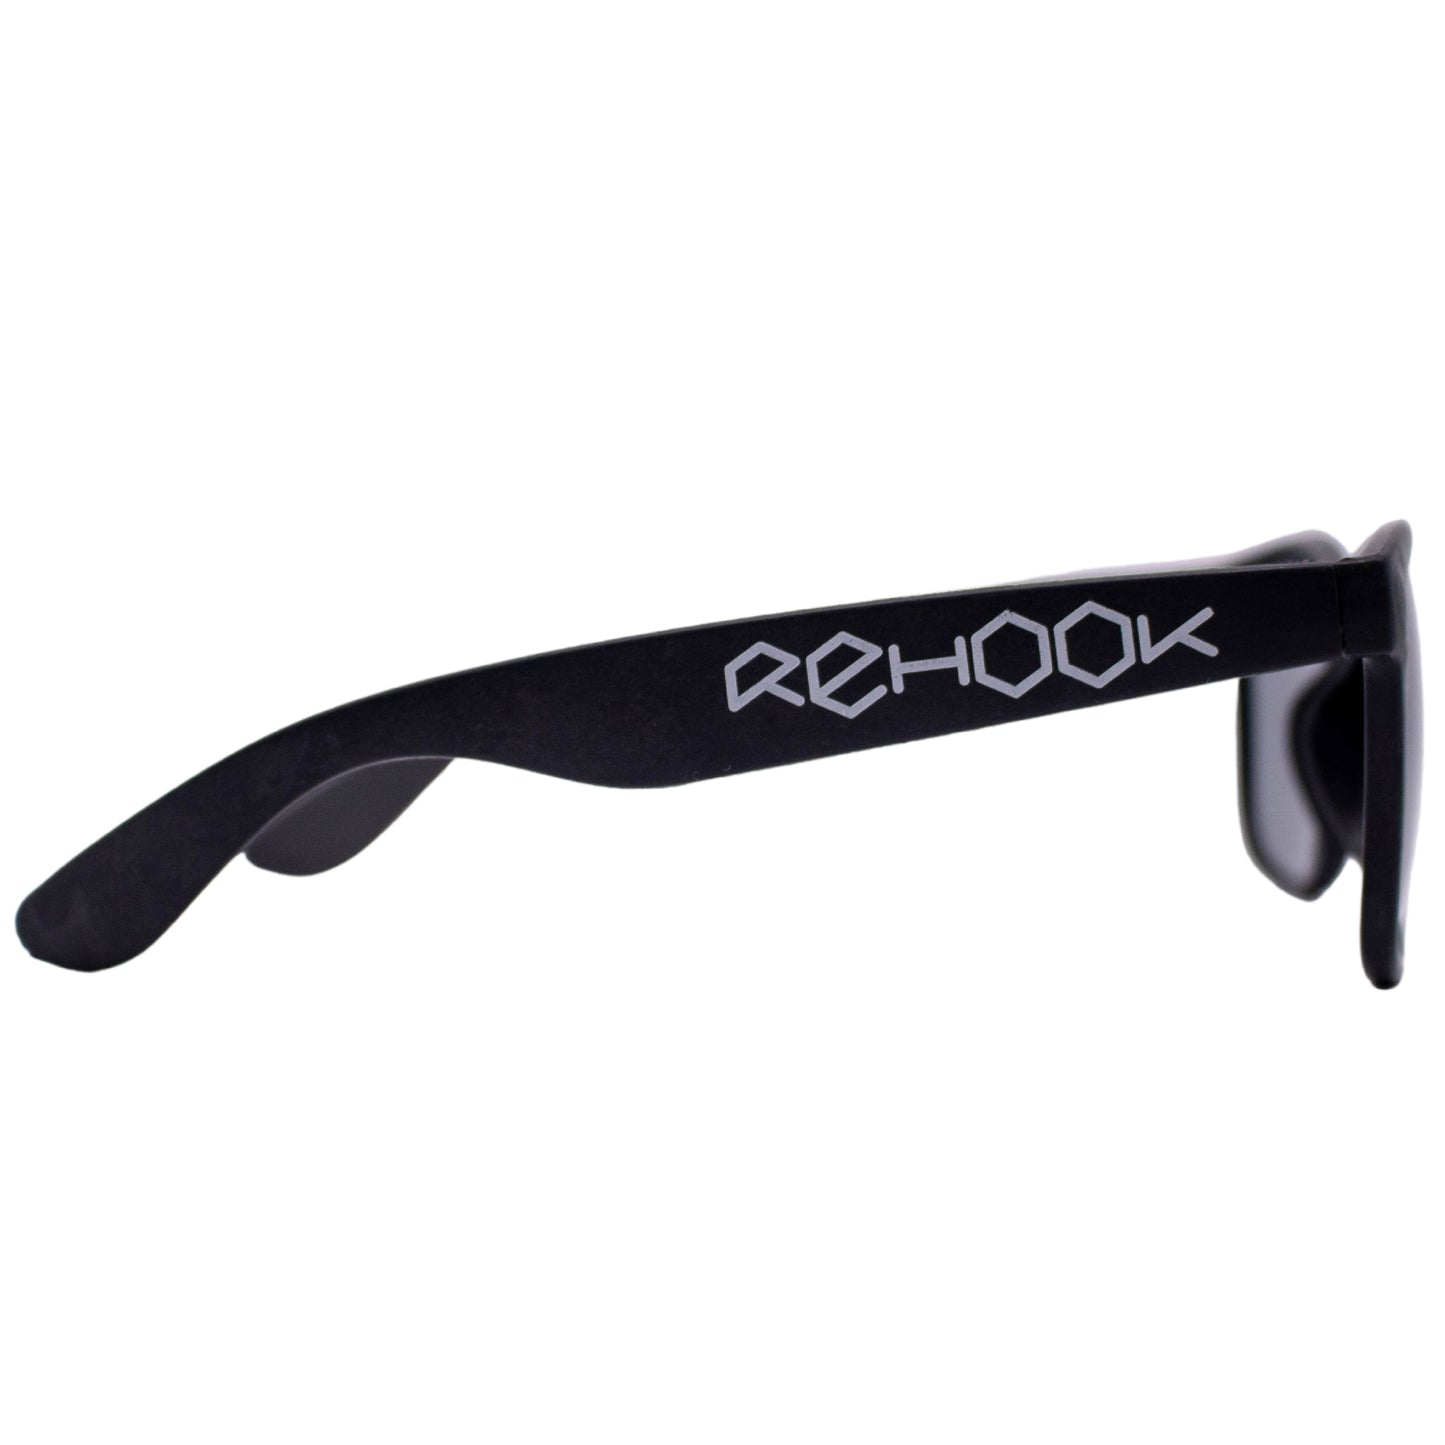 Rehook Bamboo Fibre Sunglasses